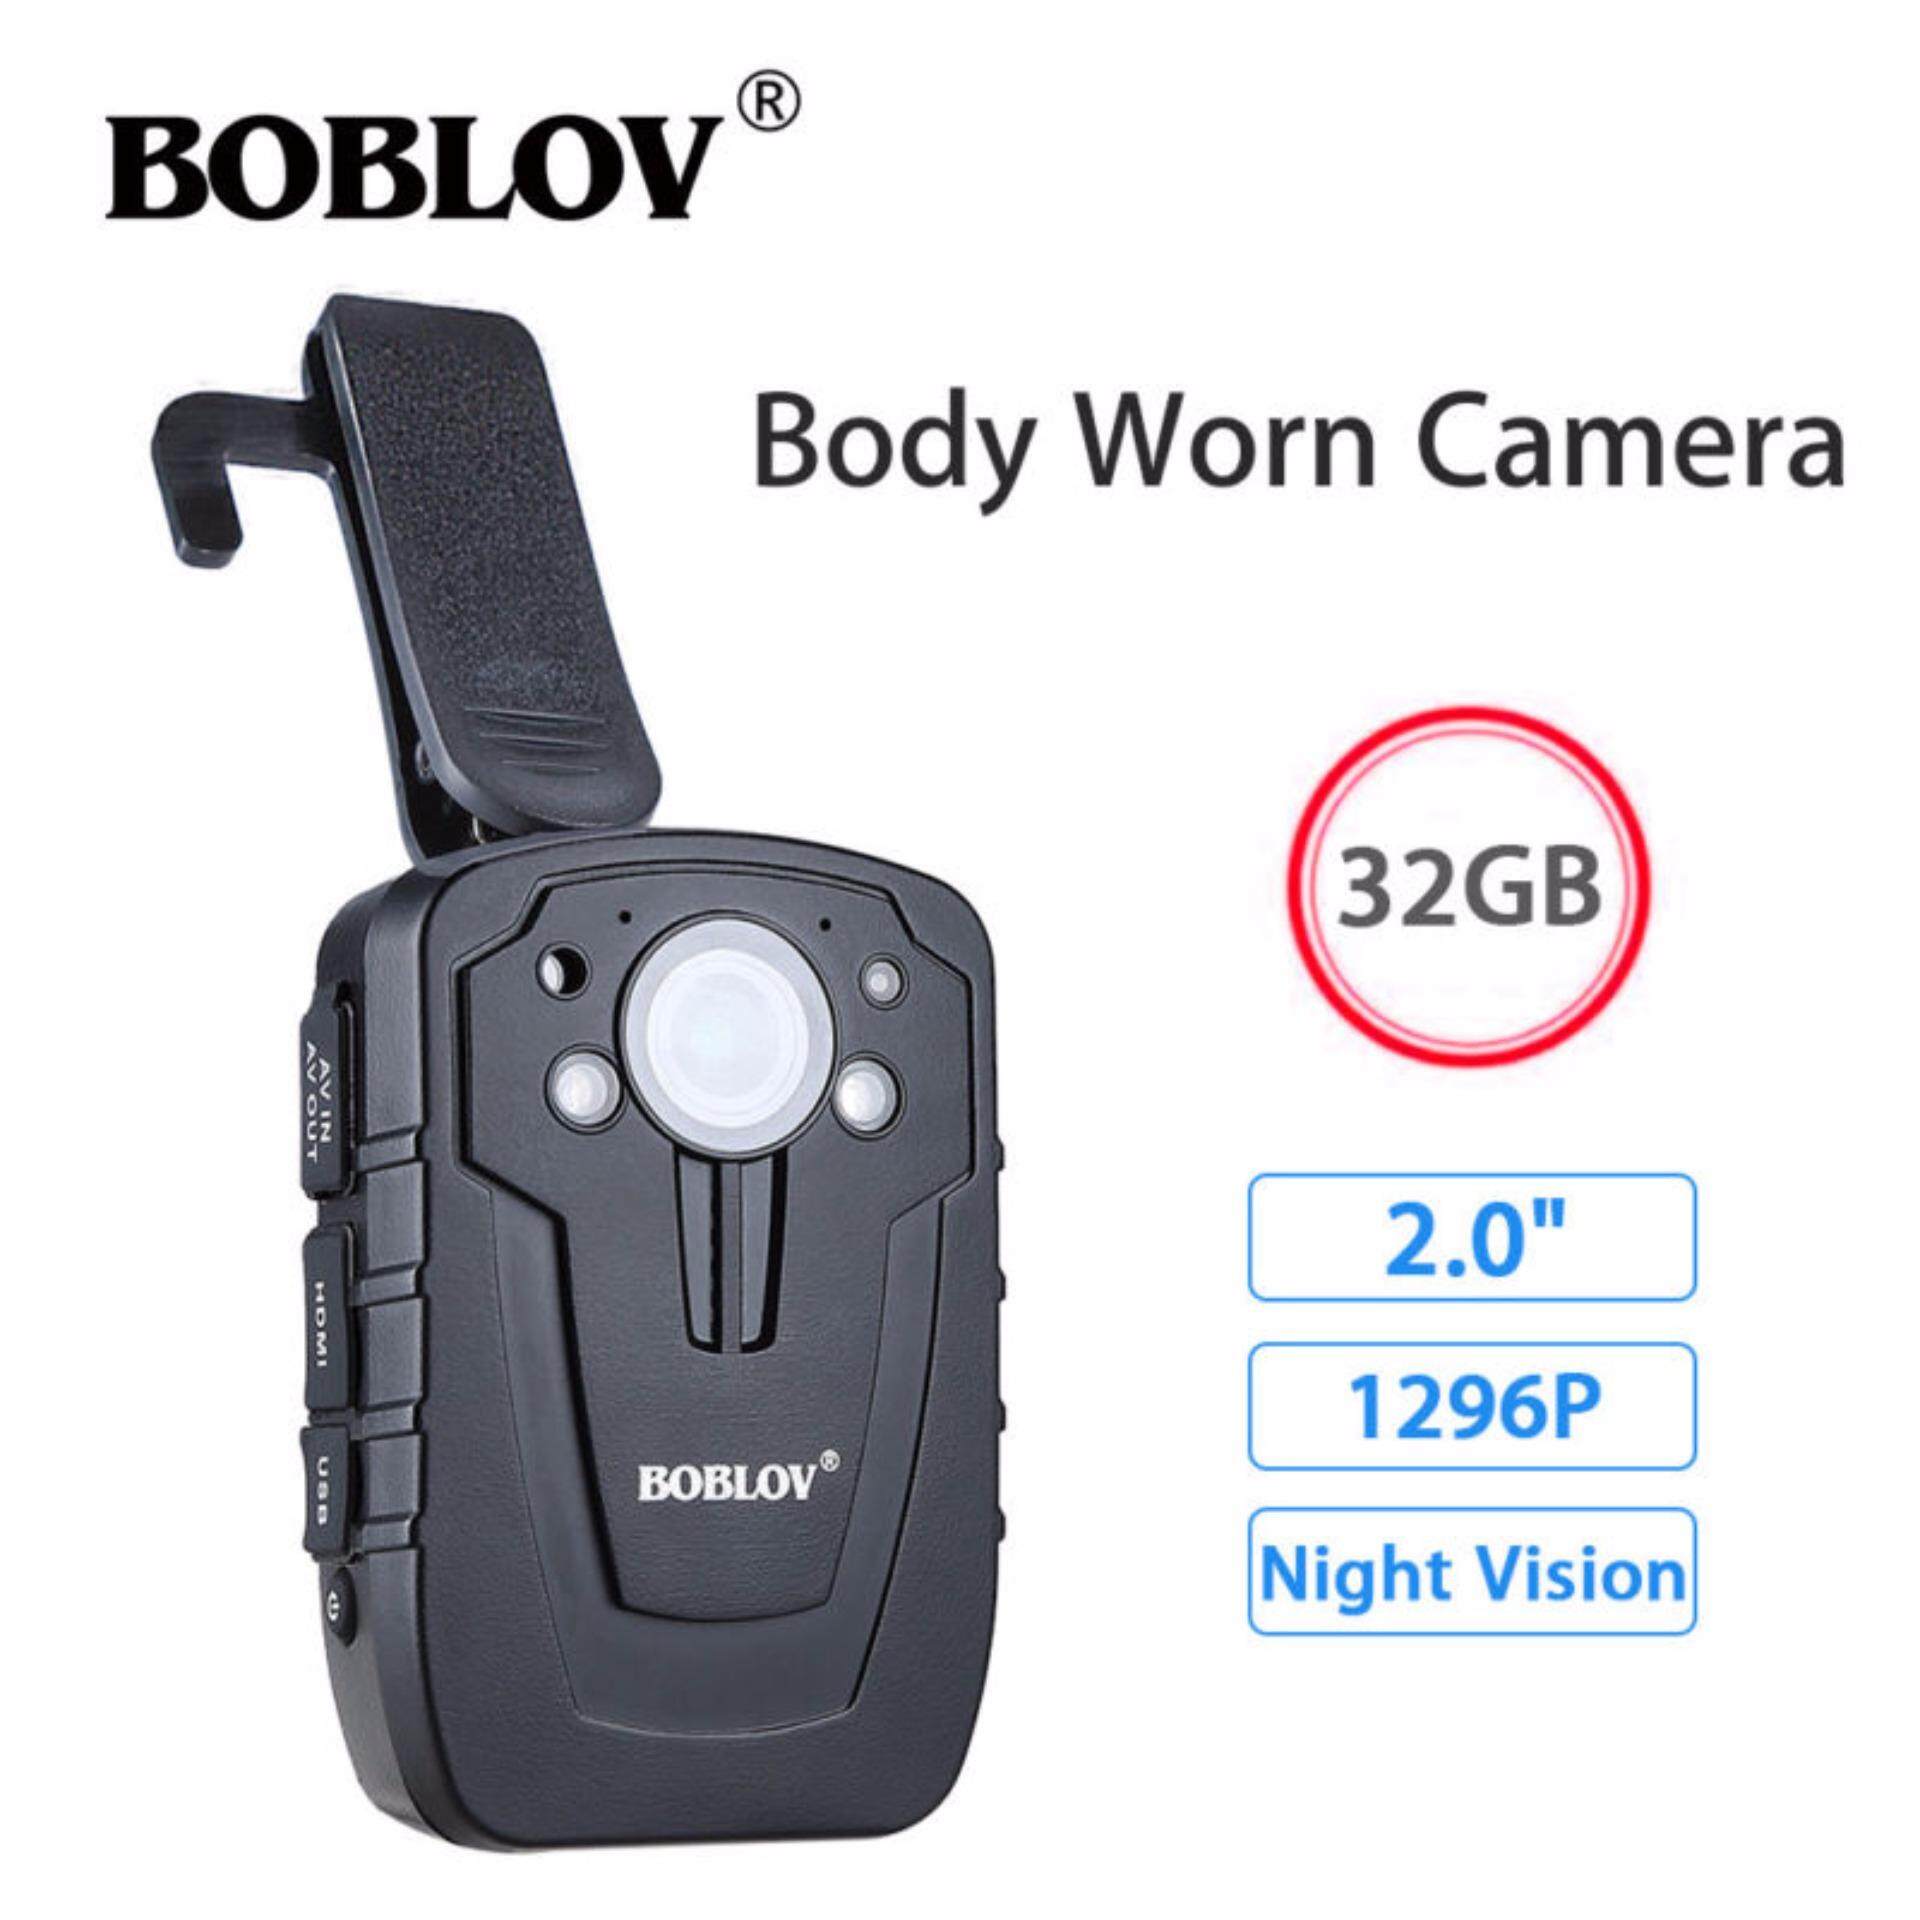 HD 1296P 32GB 2.0″ Body Police Worn Camera Recorder Night Vision Camcorder